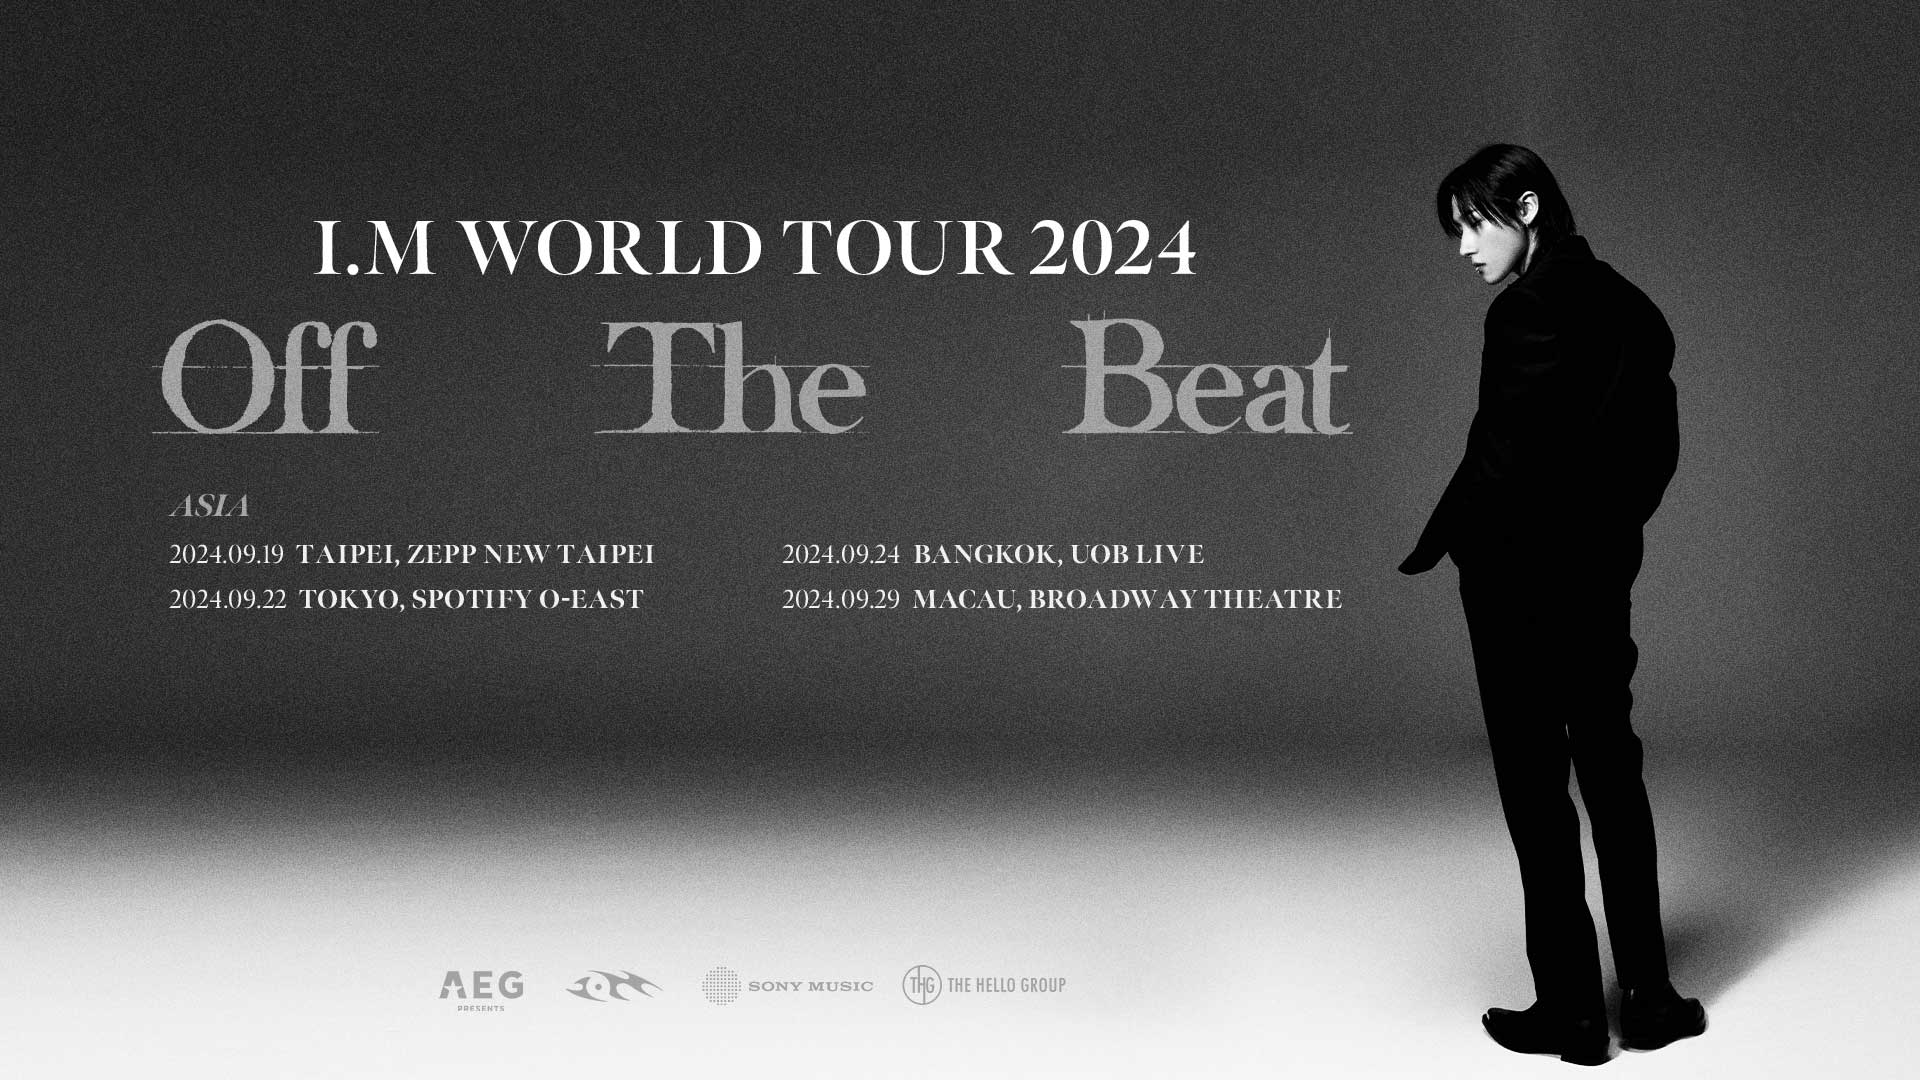 I.M. World Tour 2024 poster